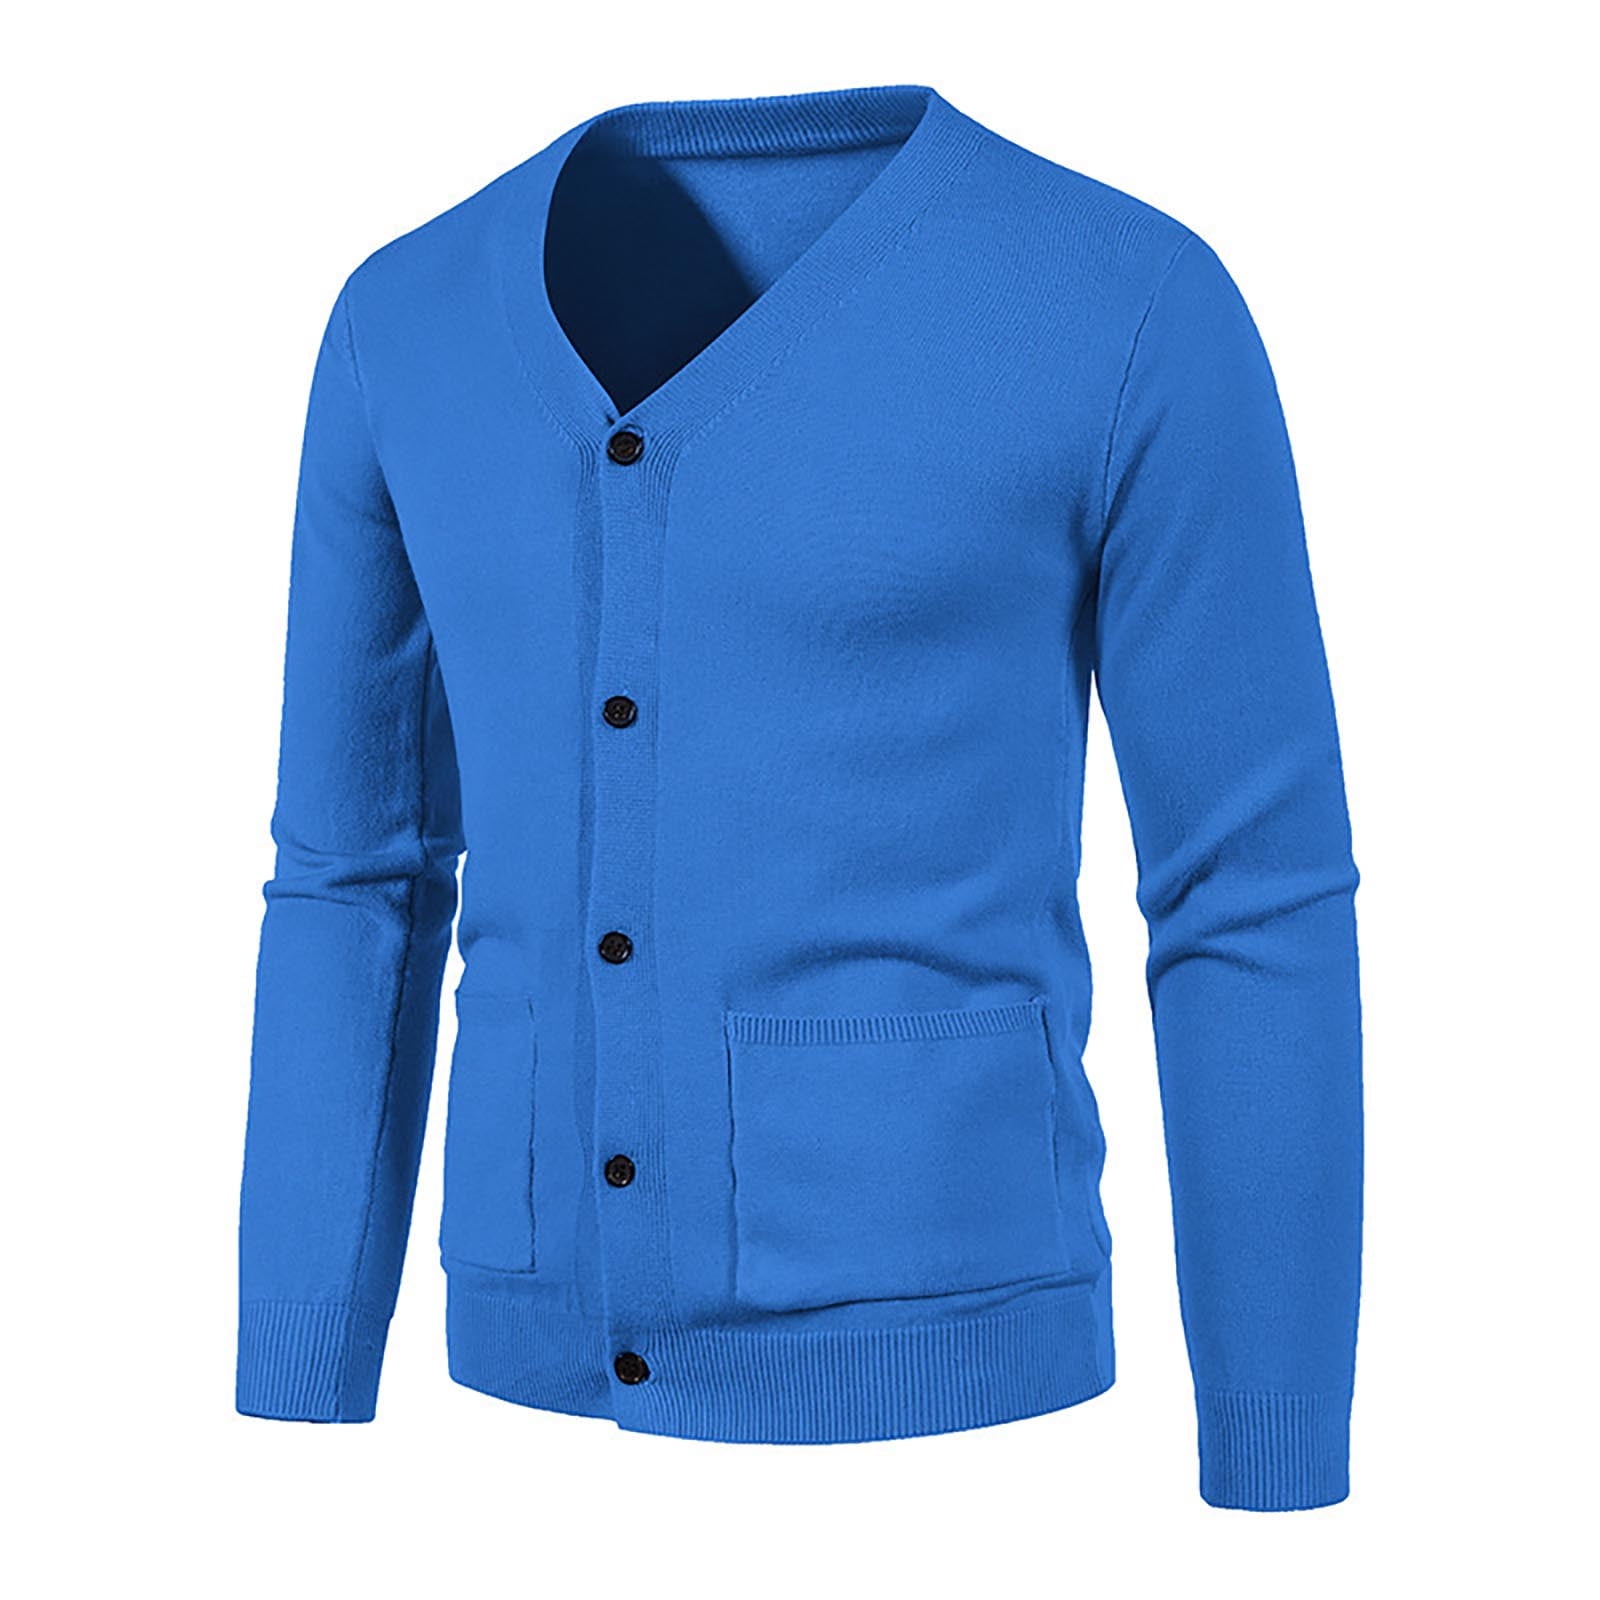 Hfyihgf Men's Cardigan Sweater Soft Cashmere Wool Blend V Neck Button ...